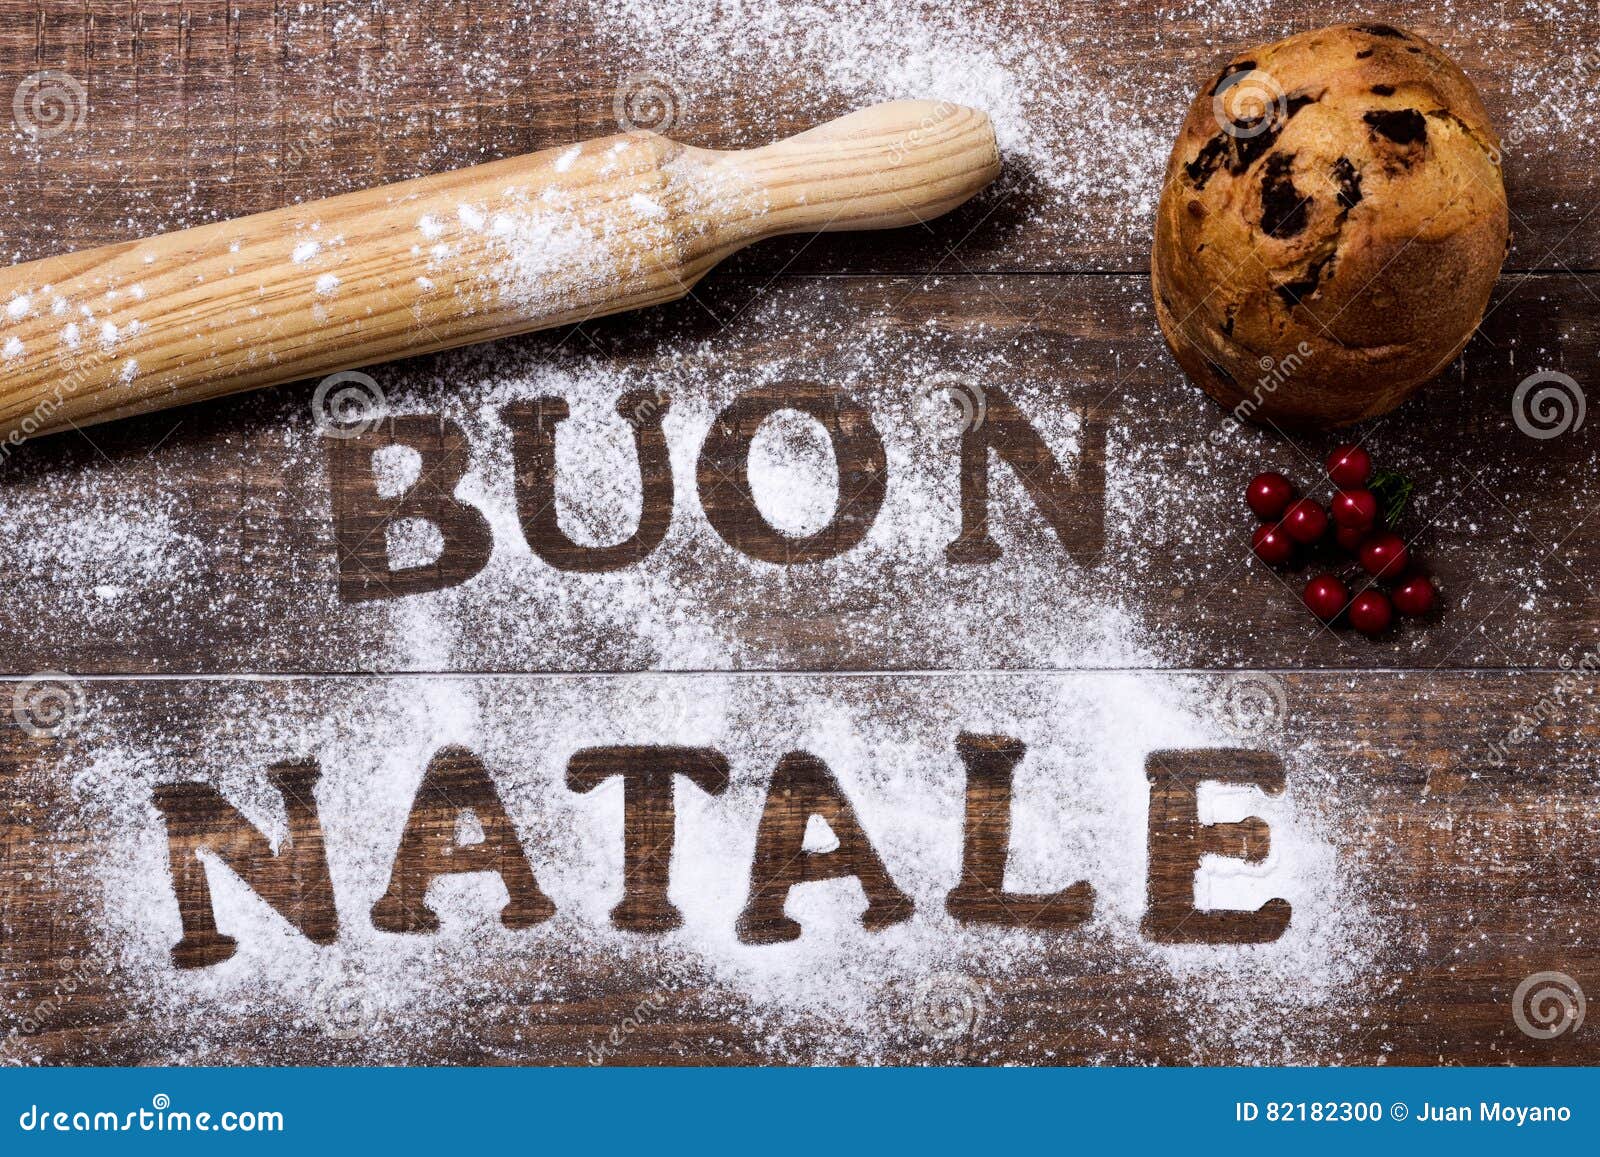 text buon natale, merry christmas in italian